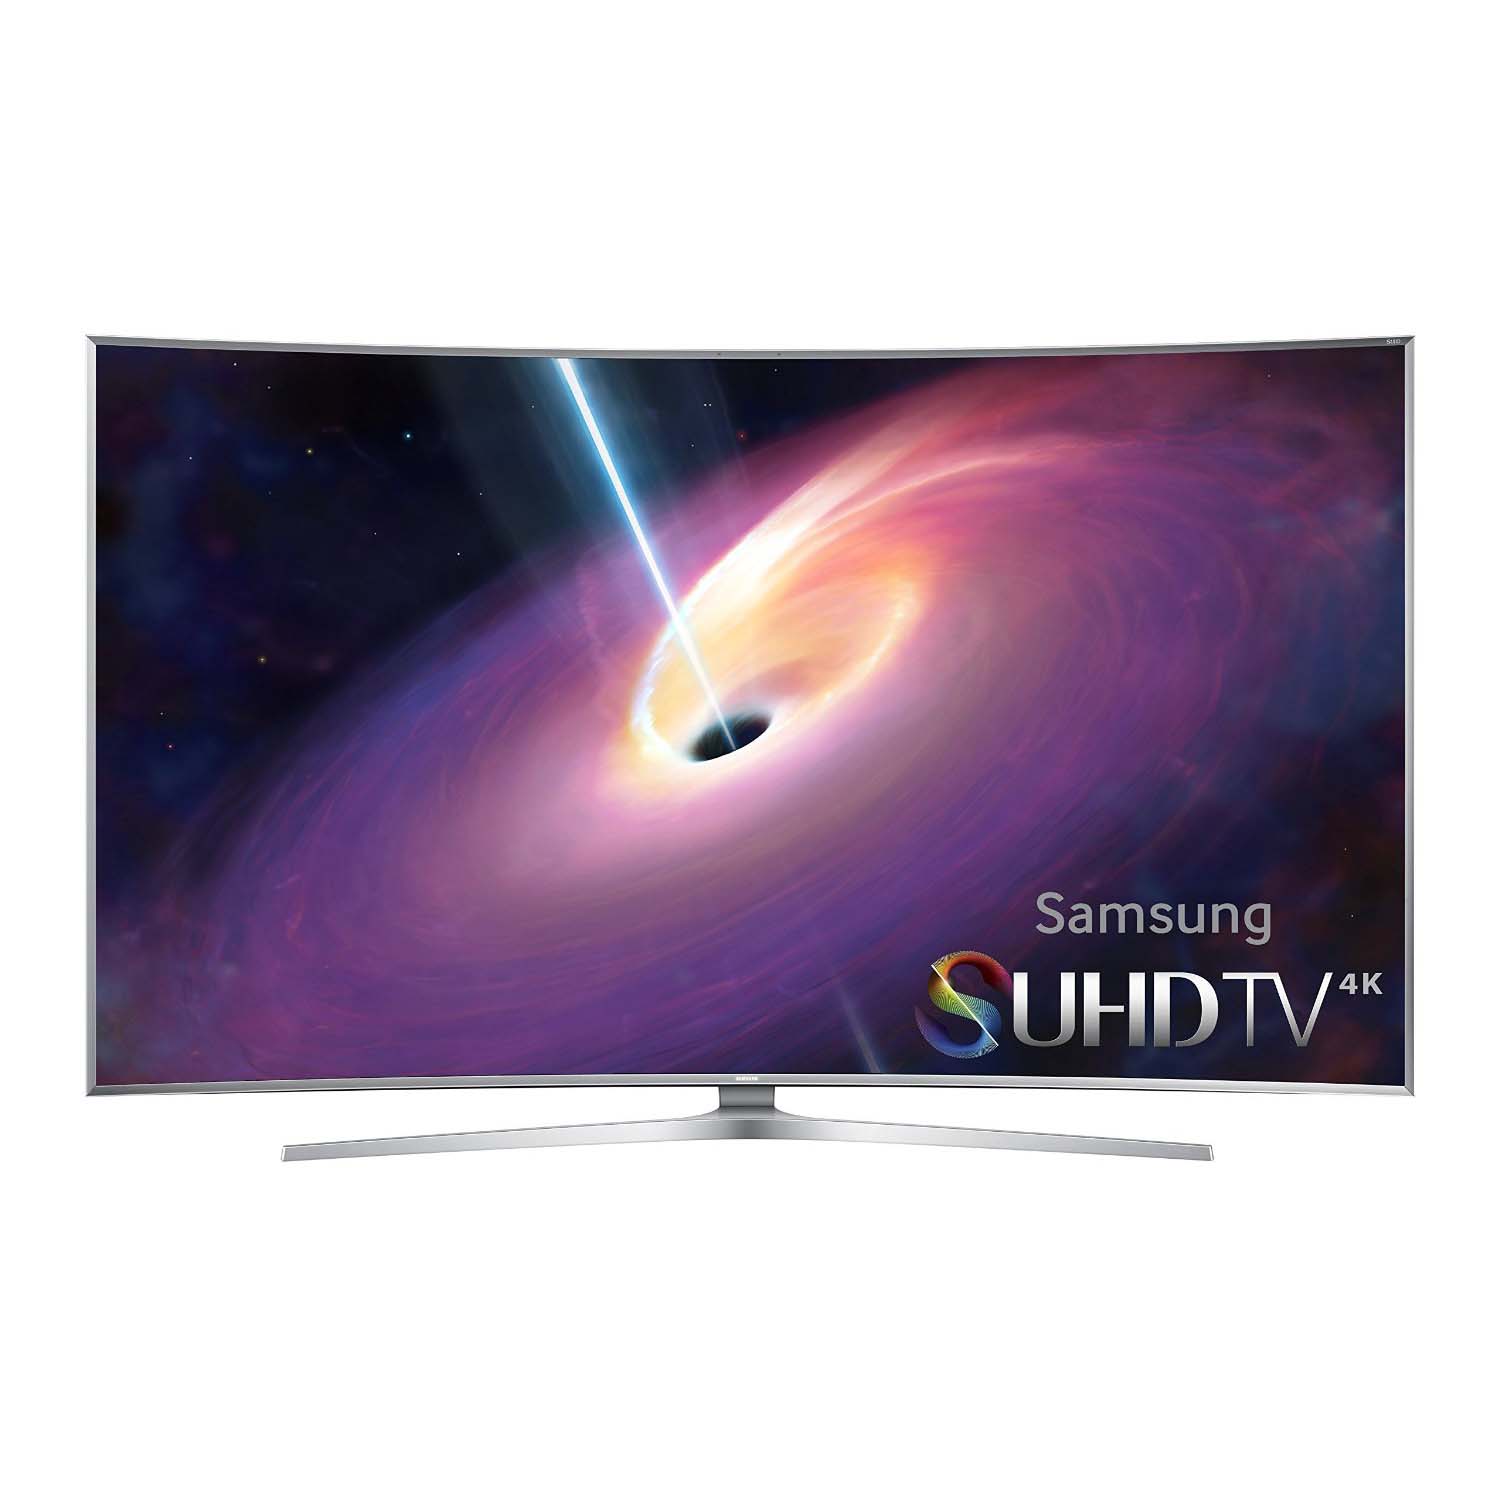 Samsung UN65JS9500 Curved 65-Inch 4K Ultra HD 3D Smart LED TV (2015 Model) *관부가세 별도*